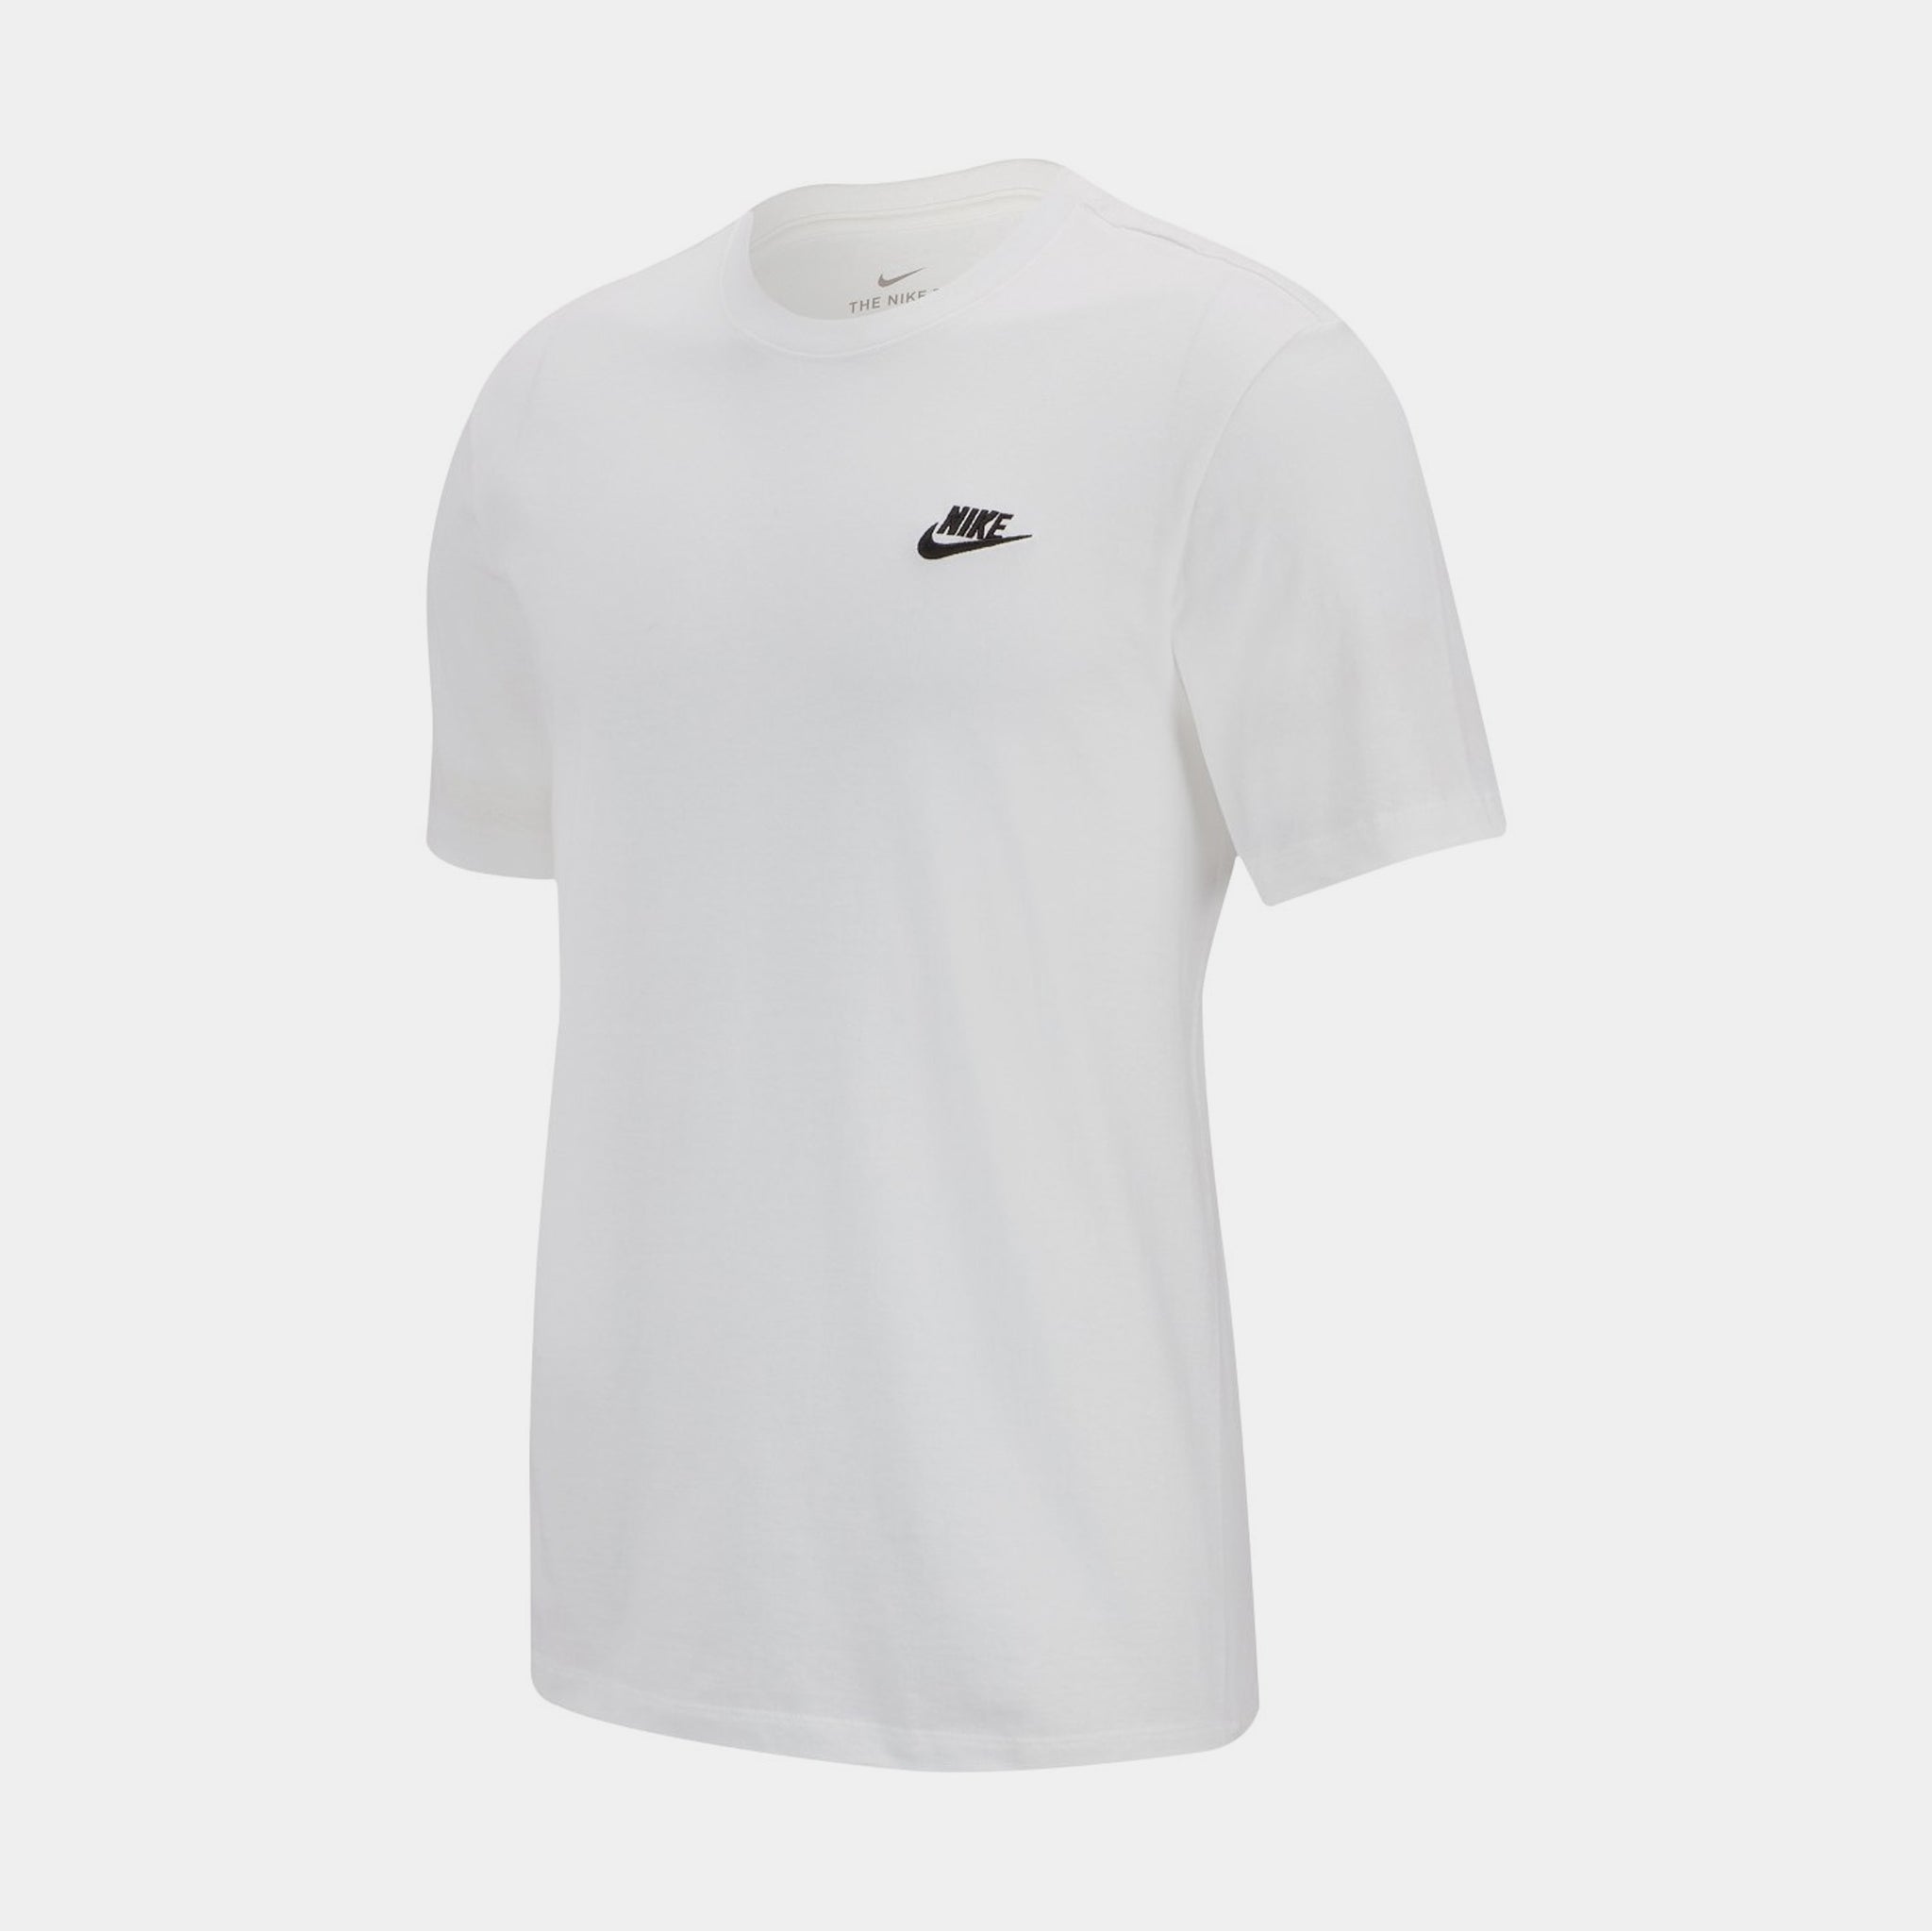 AR4997-101 Short Shoe White Nike Mens Shirt Sleeve – NSW Palace Club